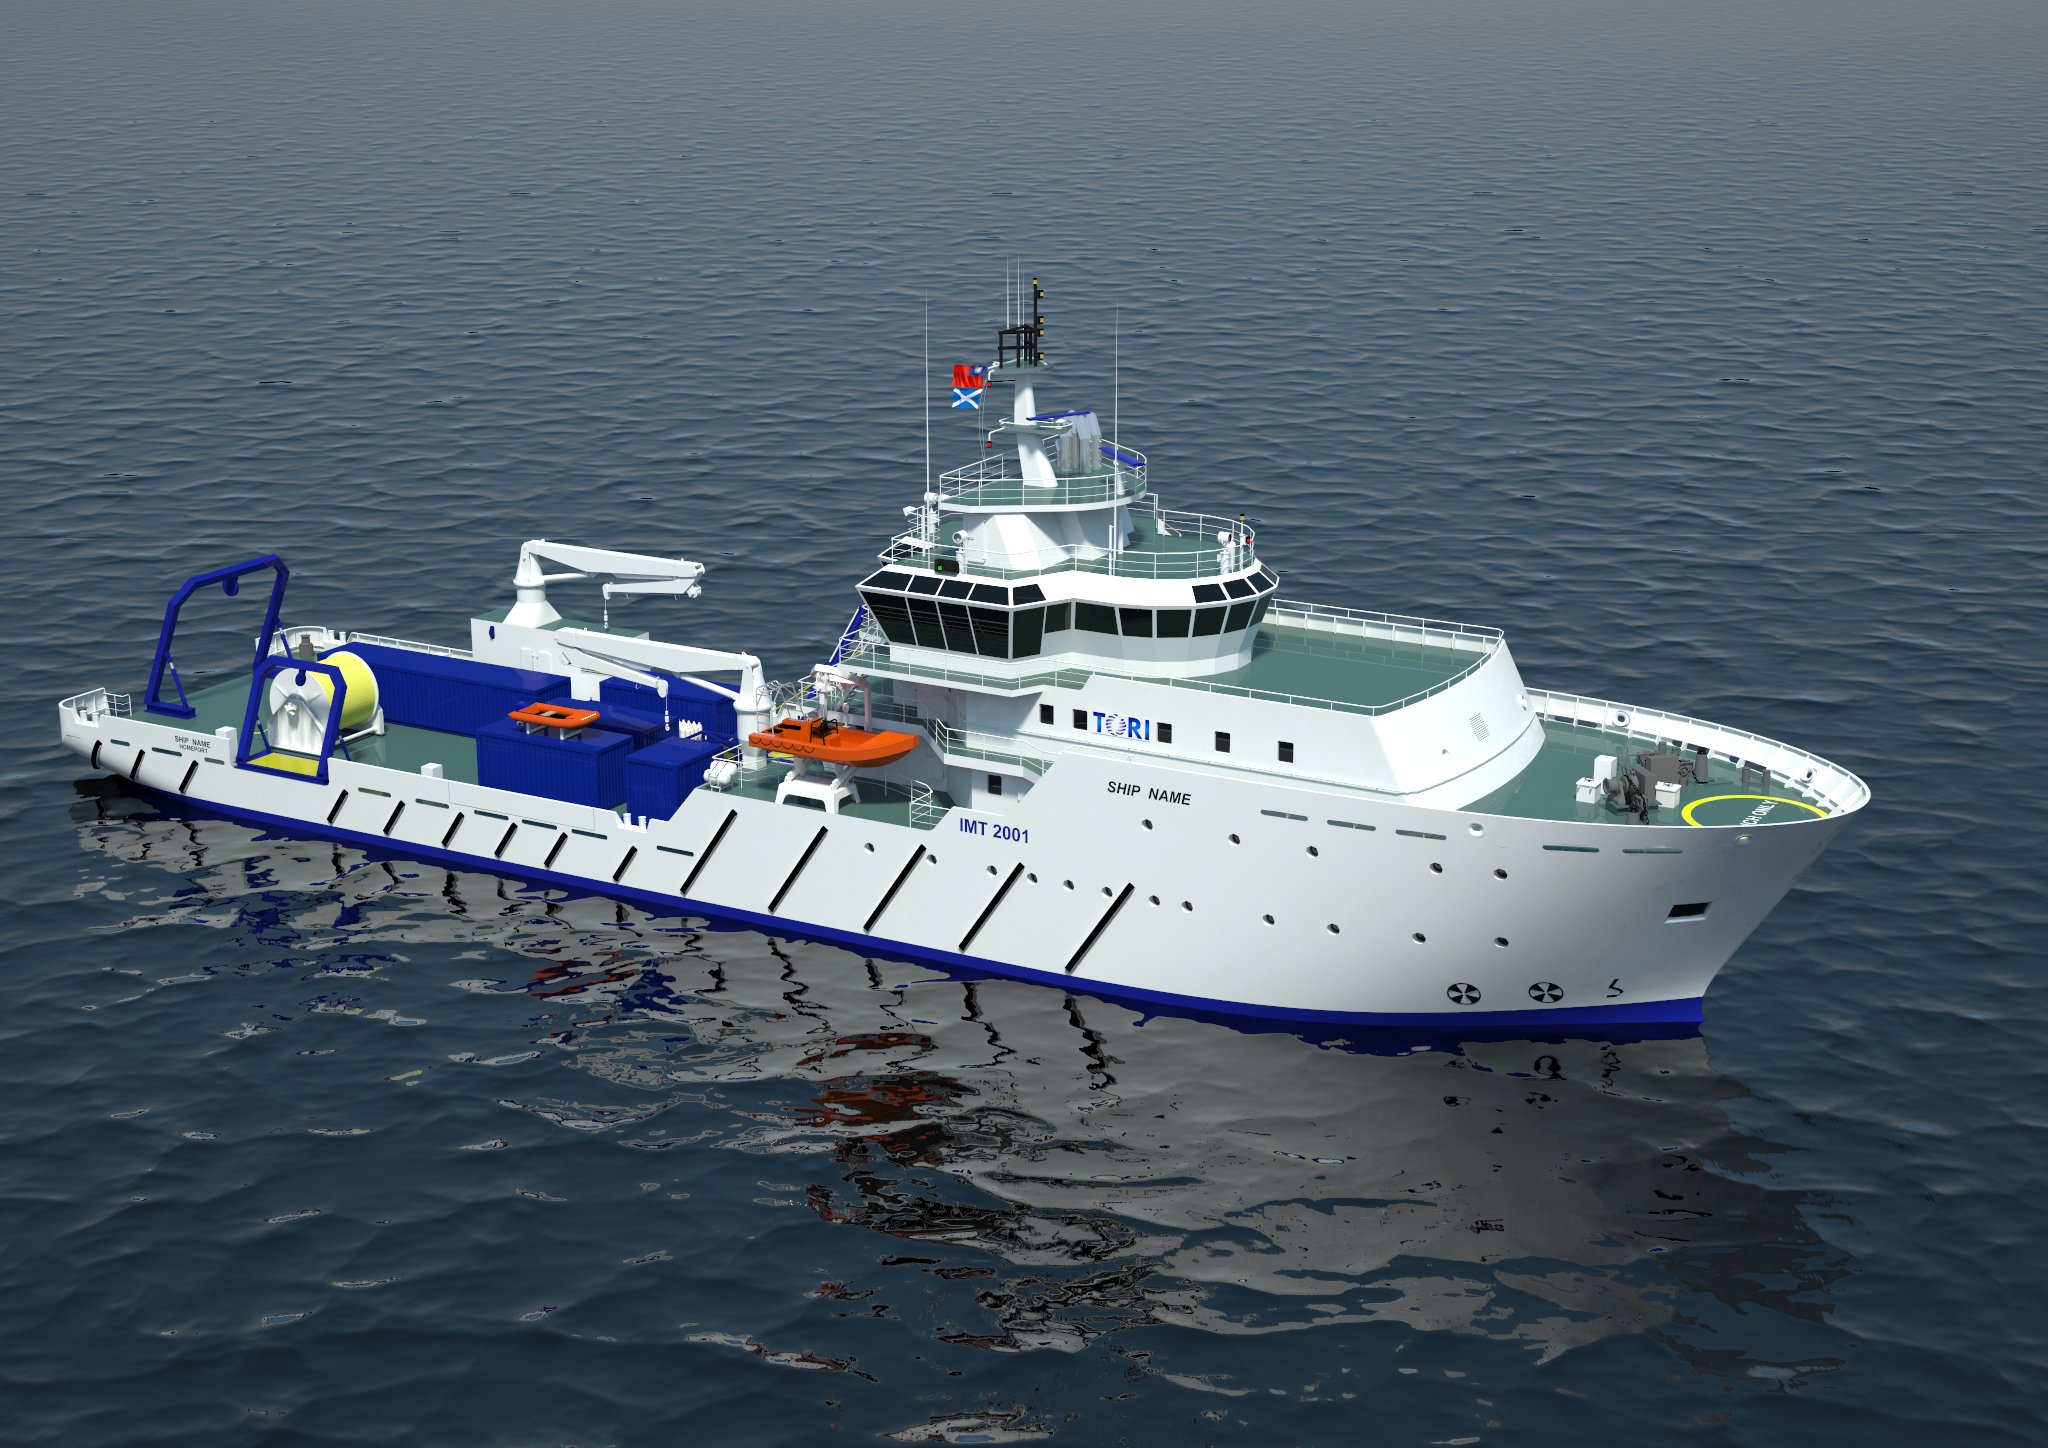 Designing ships. Seastar Endurance Vessel. Research Vessel. Research Vessel offshore. Topaz Marine Vessel.